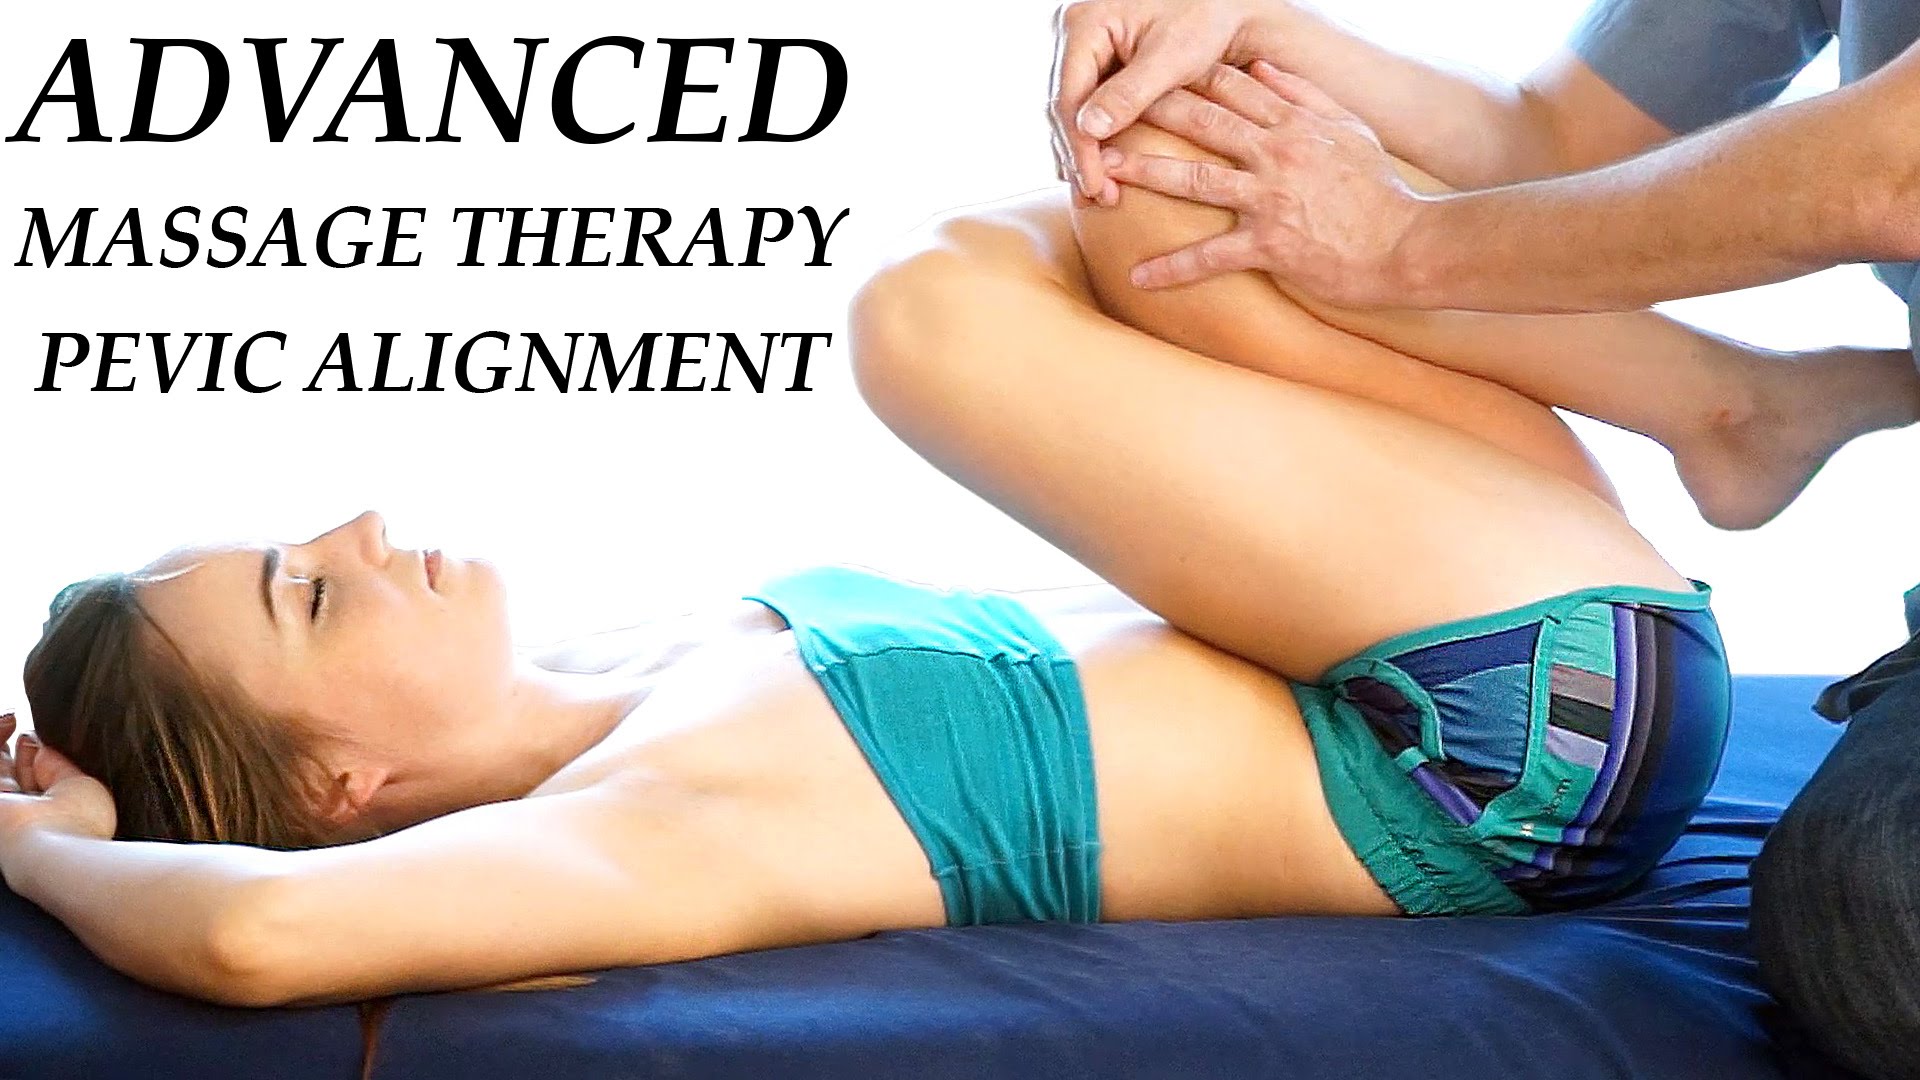 Pelvic Alignment Techniques Advanced Massage Therapy for Low Back Pain & Sciatica